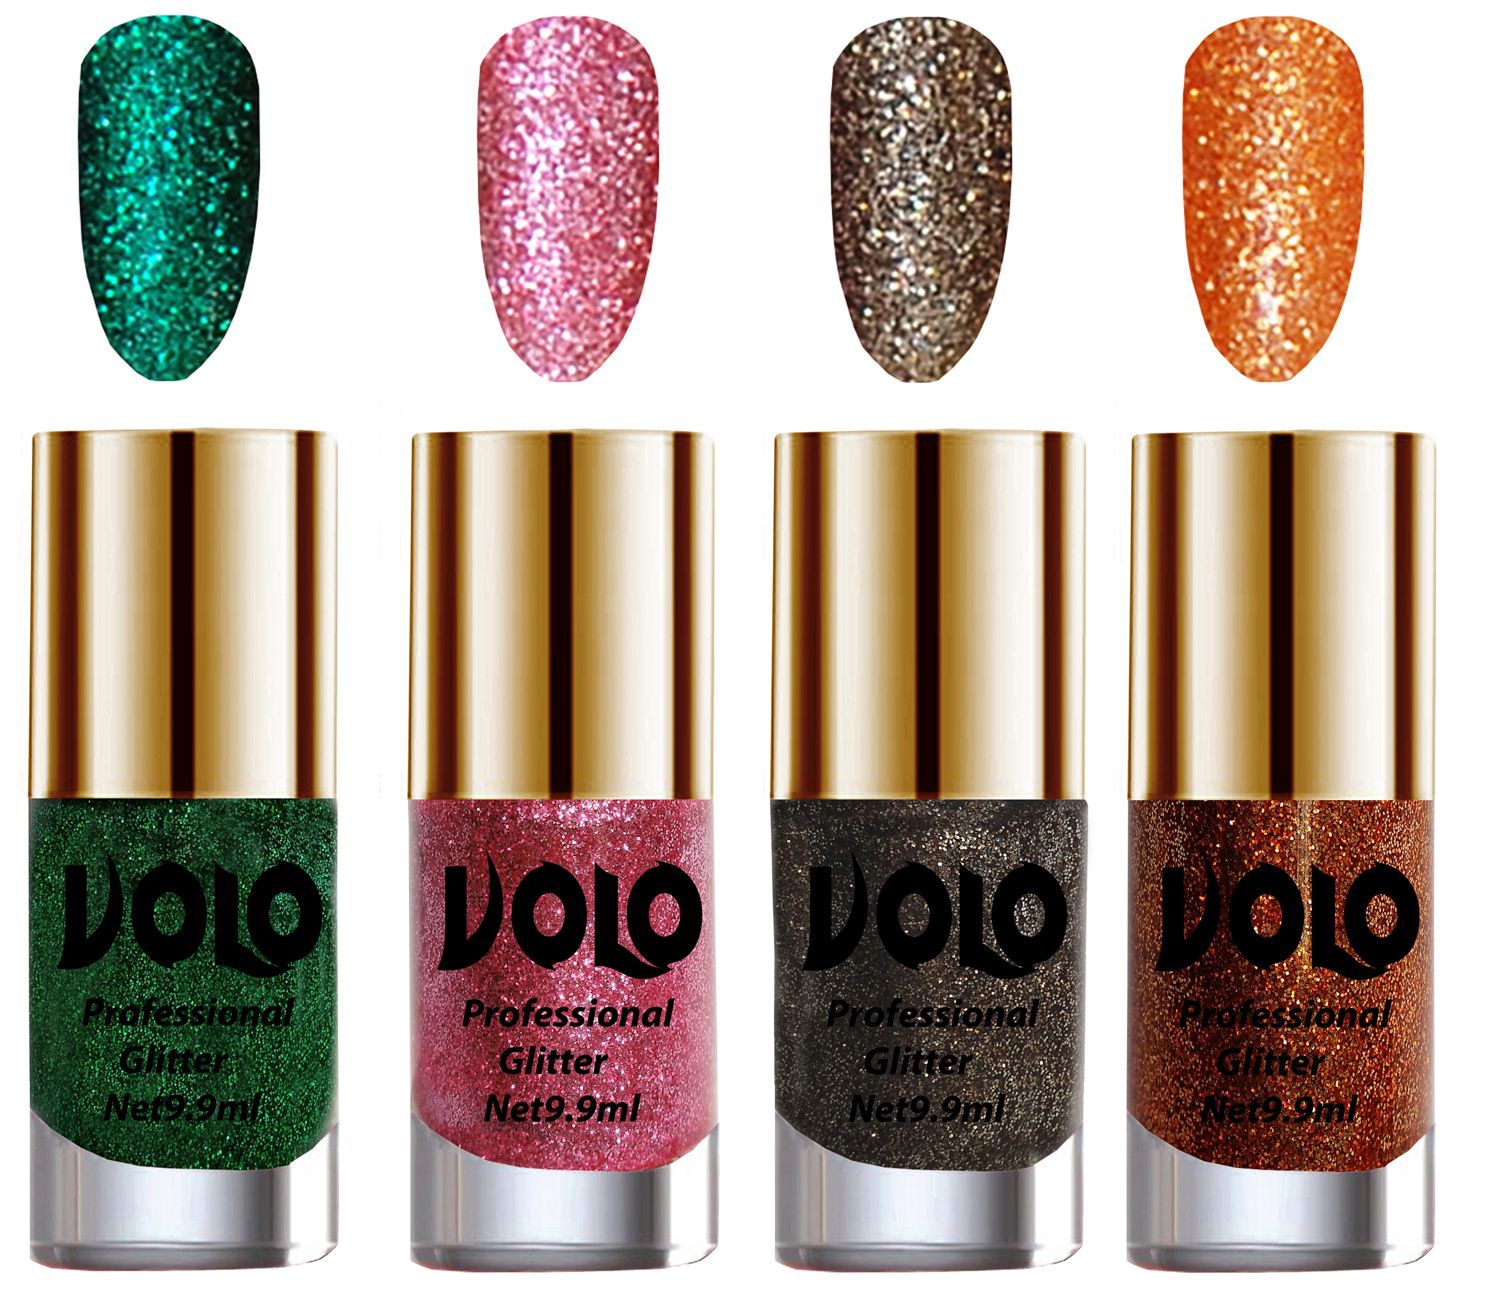     			VOLO Professionally Used Glitter Shine Nail Polish Green,Pink,Grey Orange Pack of 4 39 mL